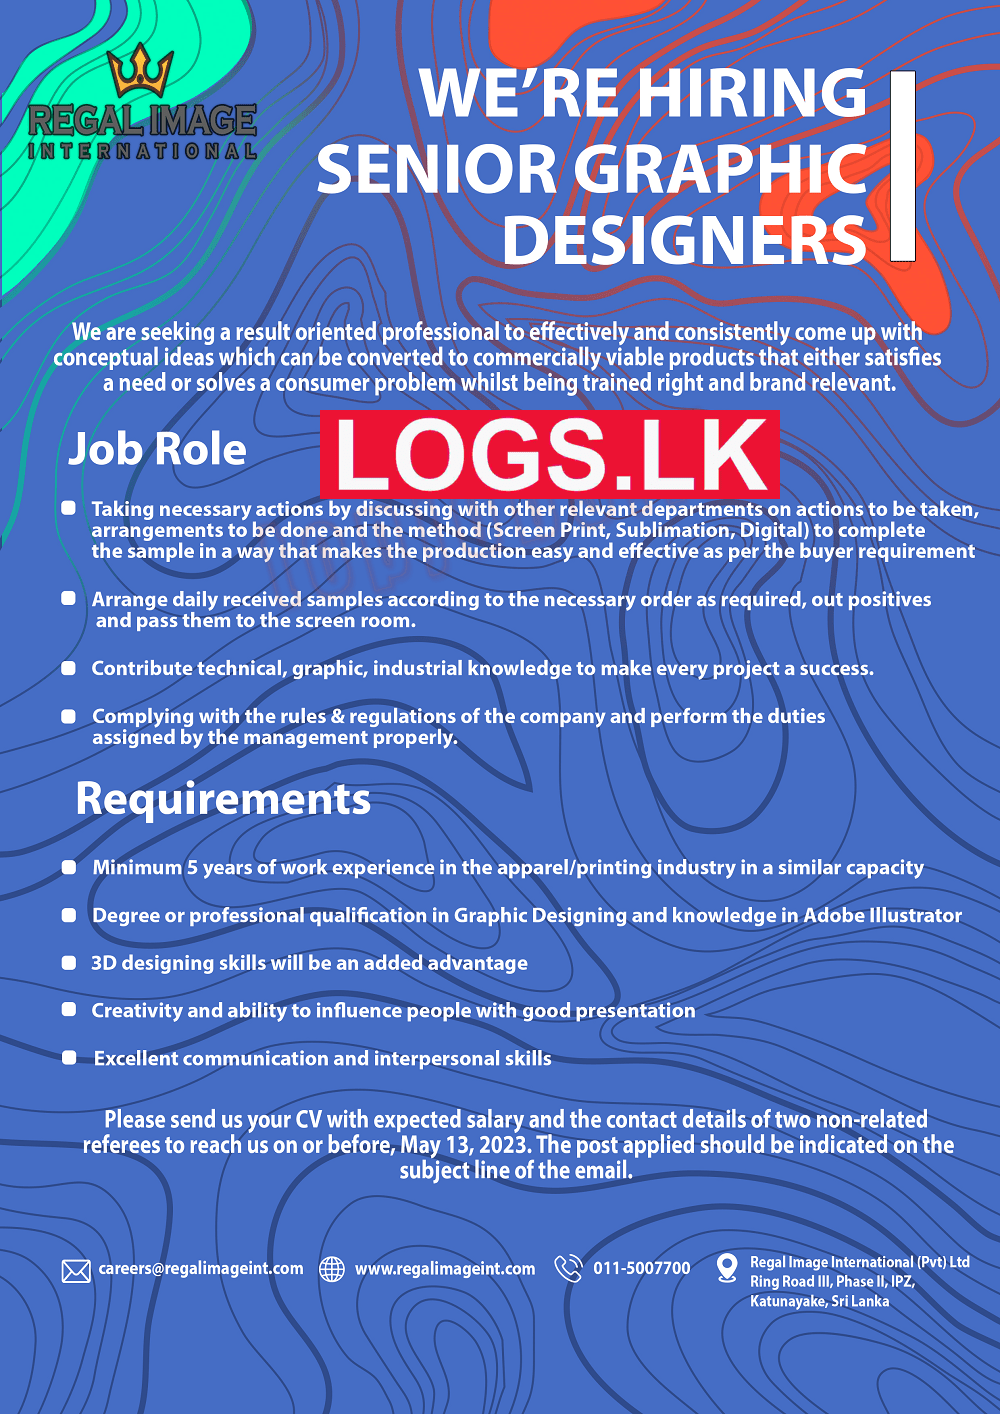 Senior Graphic Designers Vacancies at Regal Image International Job Vacancy in Sri Lanka